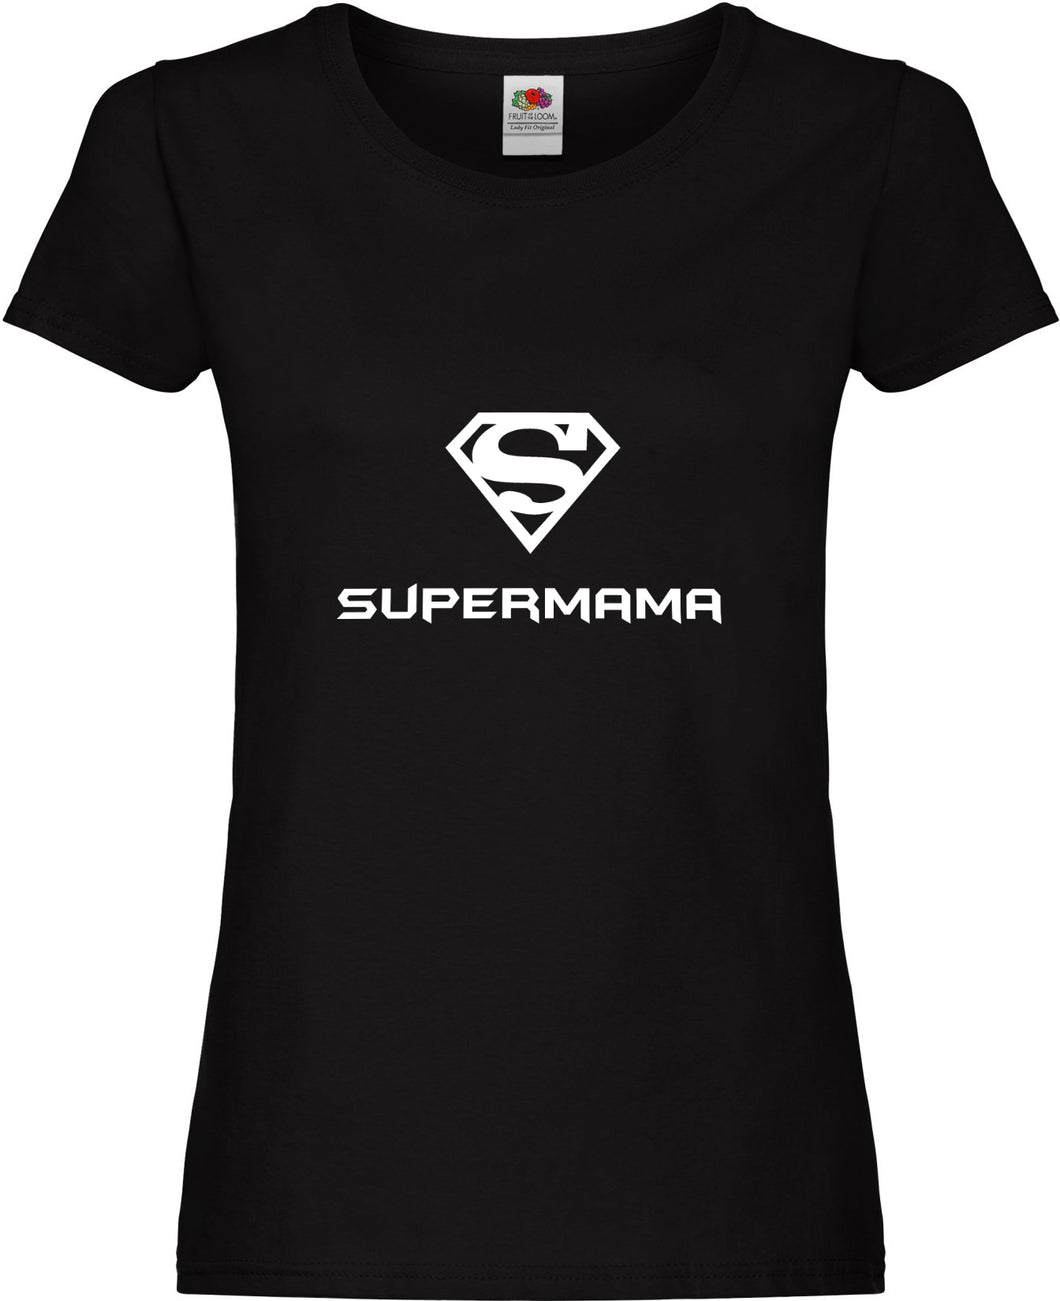 Girly T-Shirt - Supermama